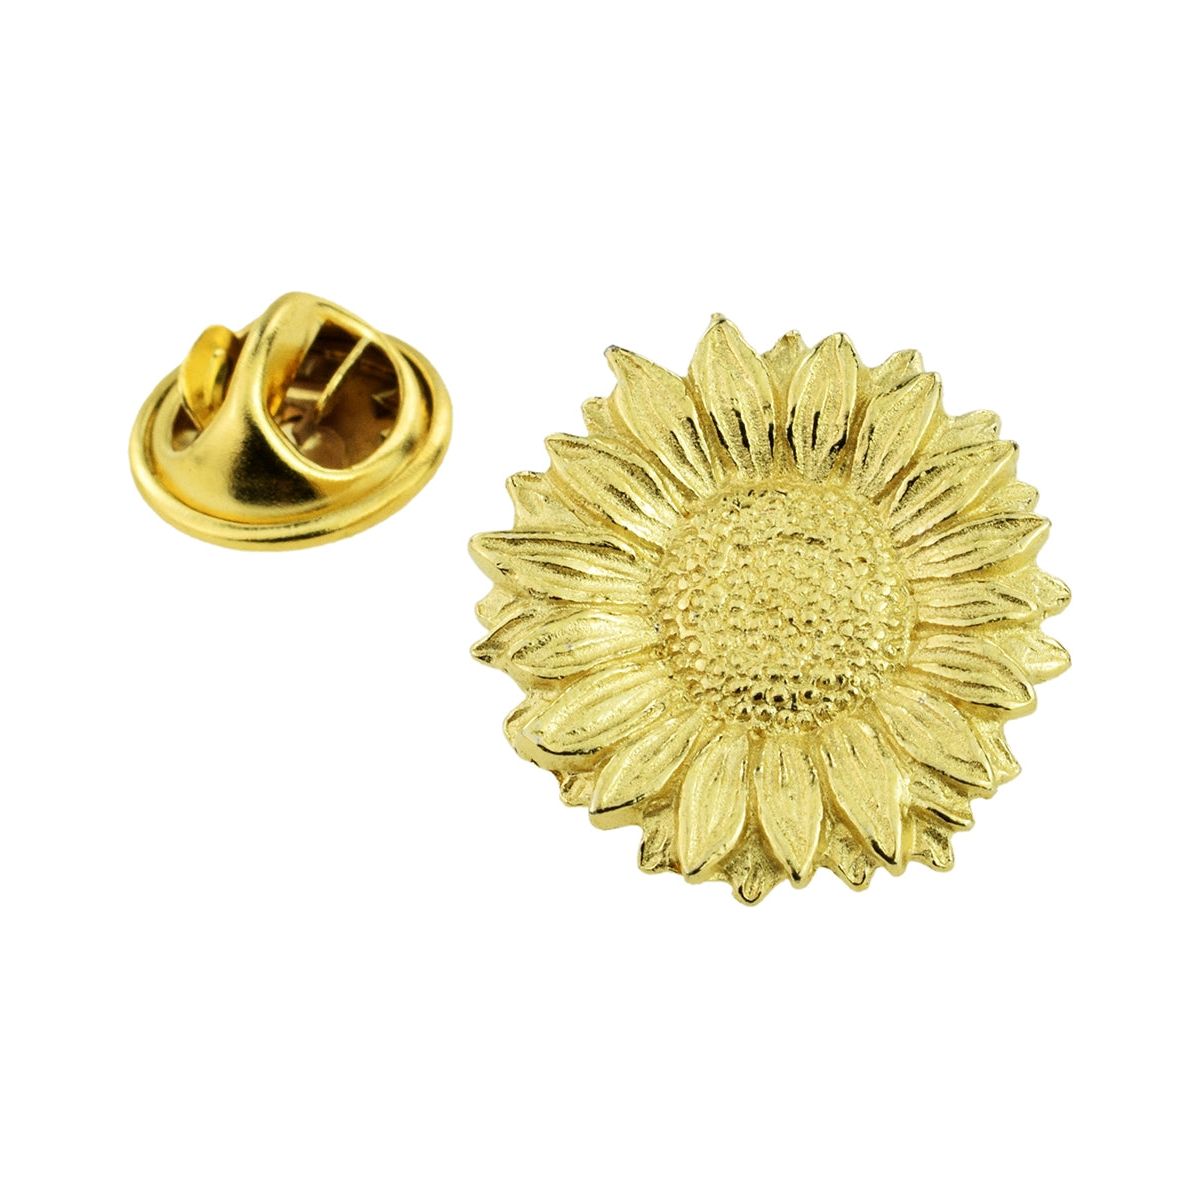 Van Gogh Style Sunflower Golden Pewter Lapel Pin Badge - Ashton and Finch